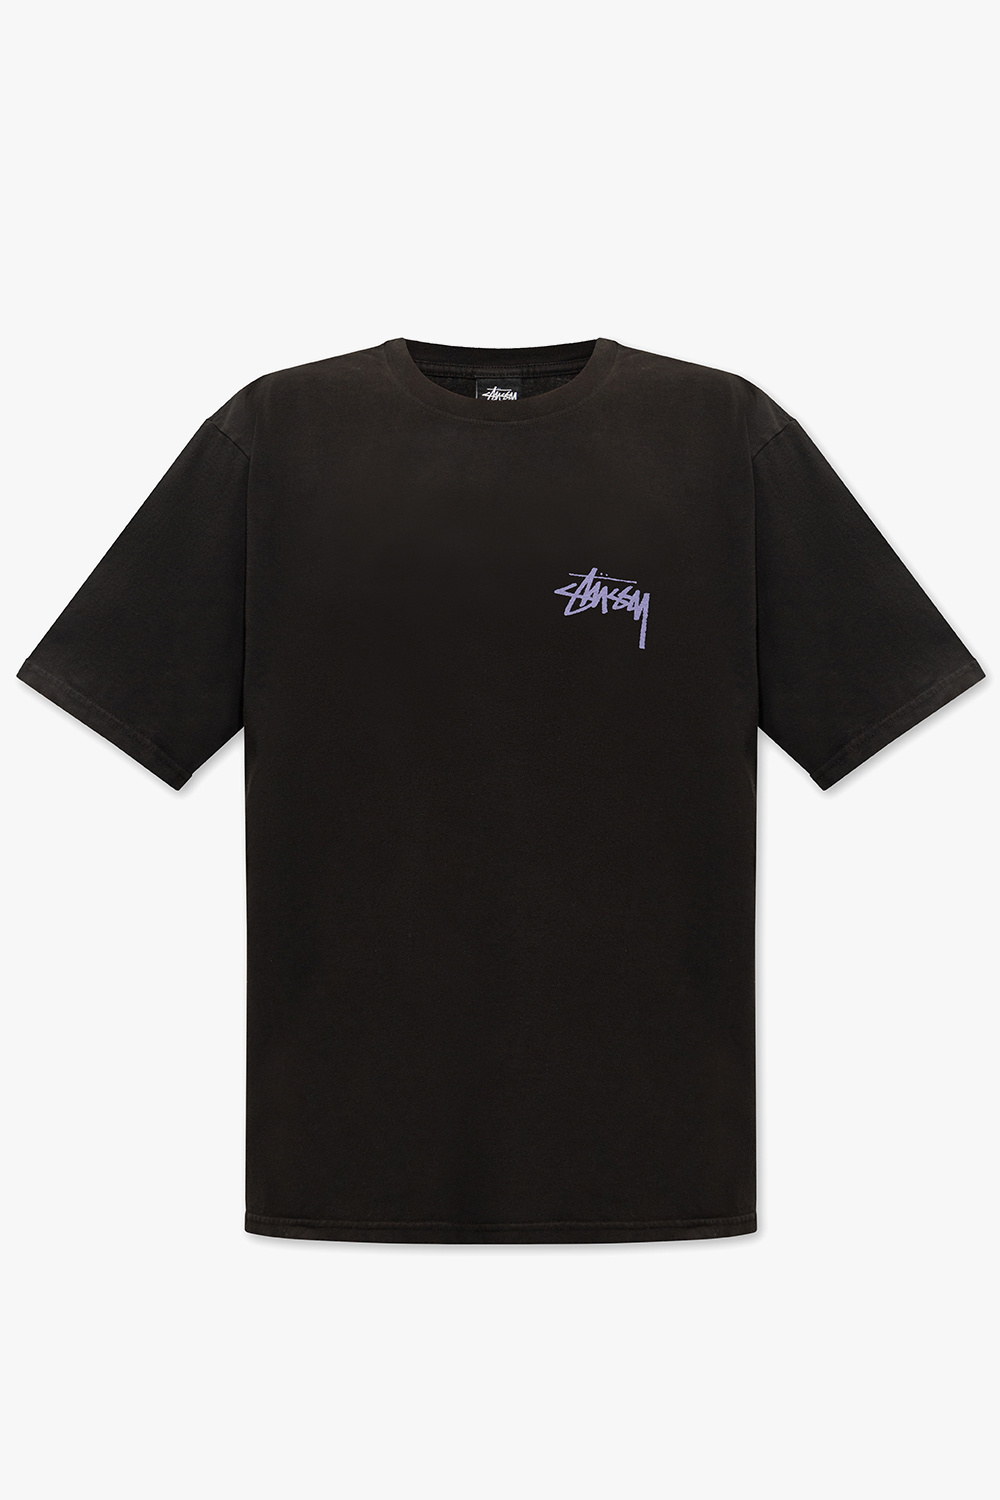 Stussy Reebok Classics T-shirt in zwart met wassing